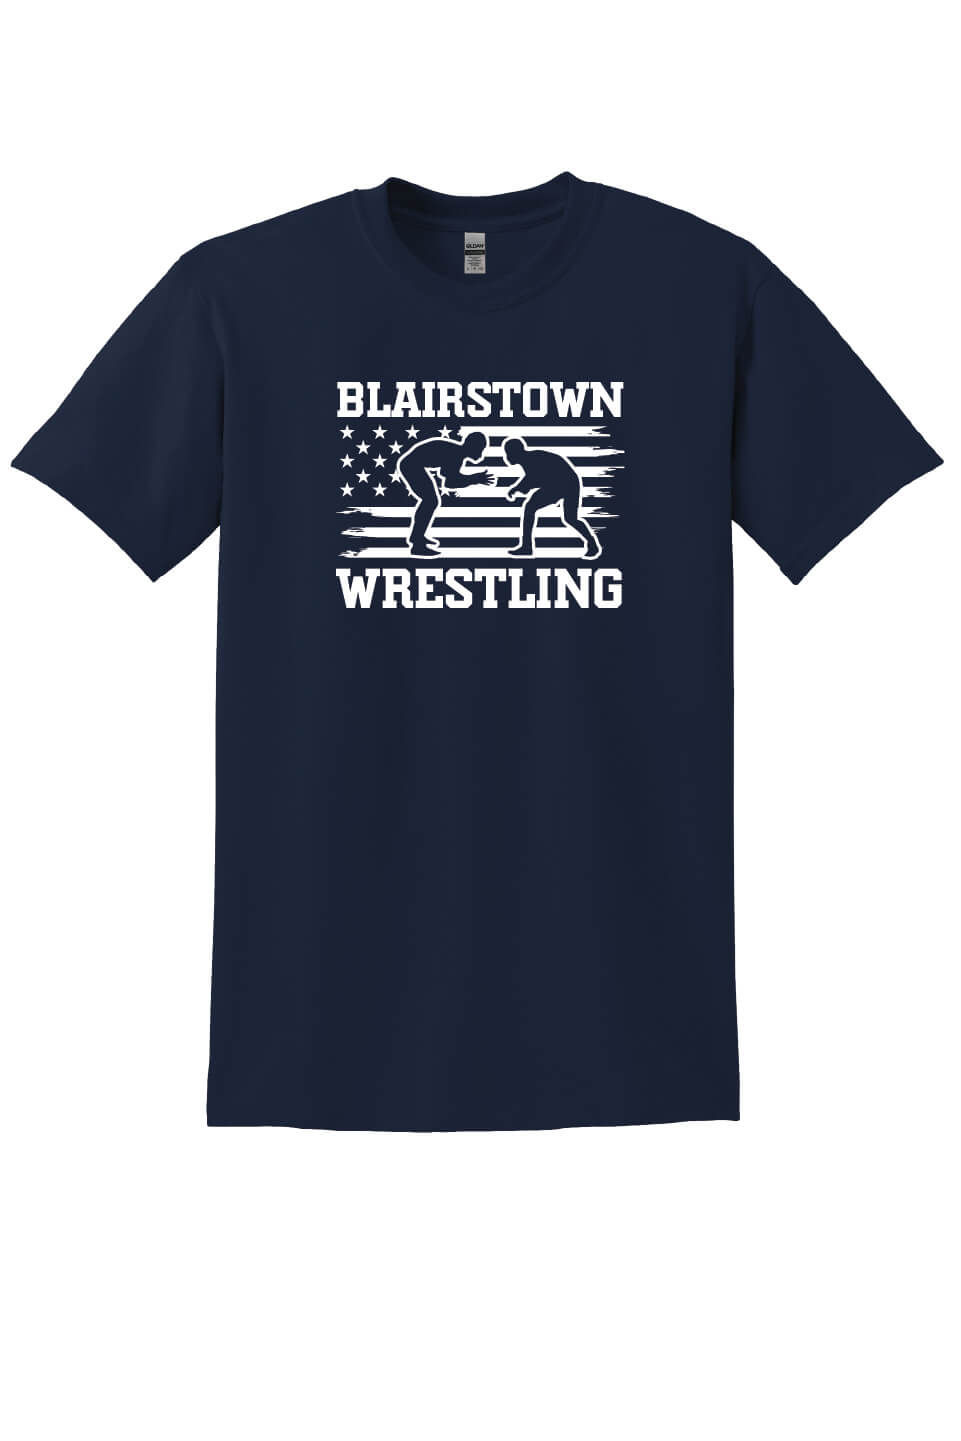 Blairstown Wrestling Flag Short Sleeve T-Shirt navy